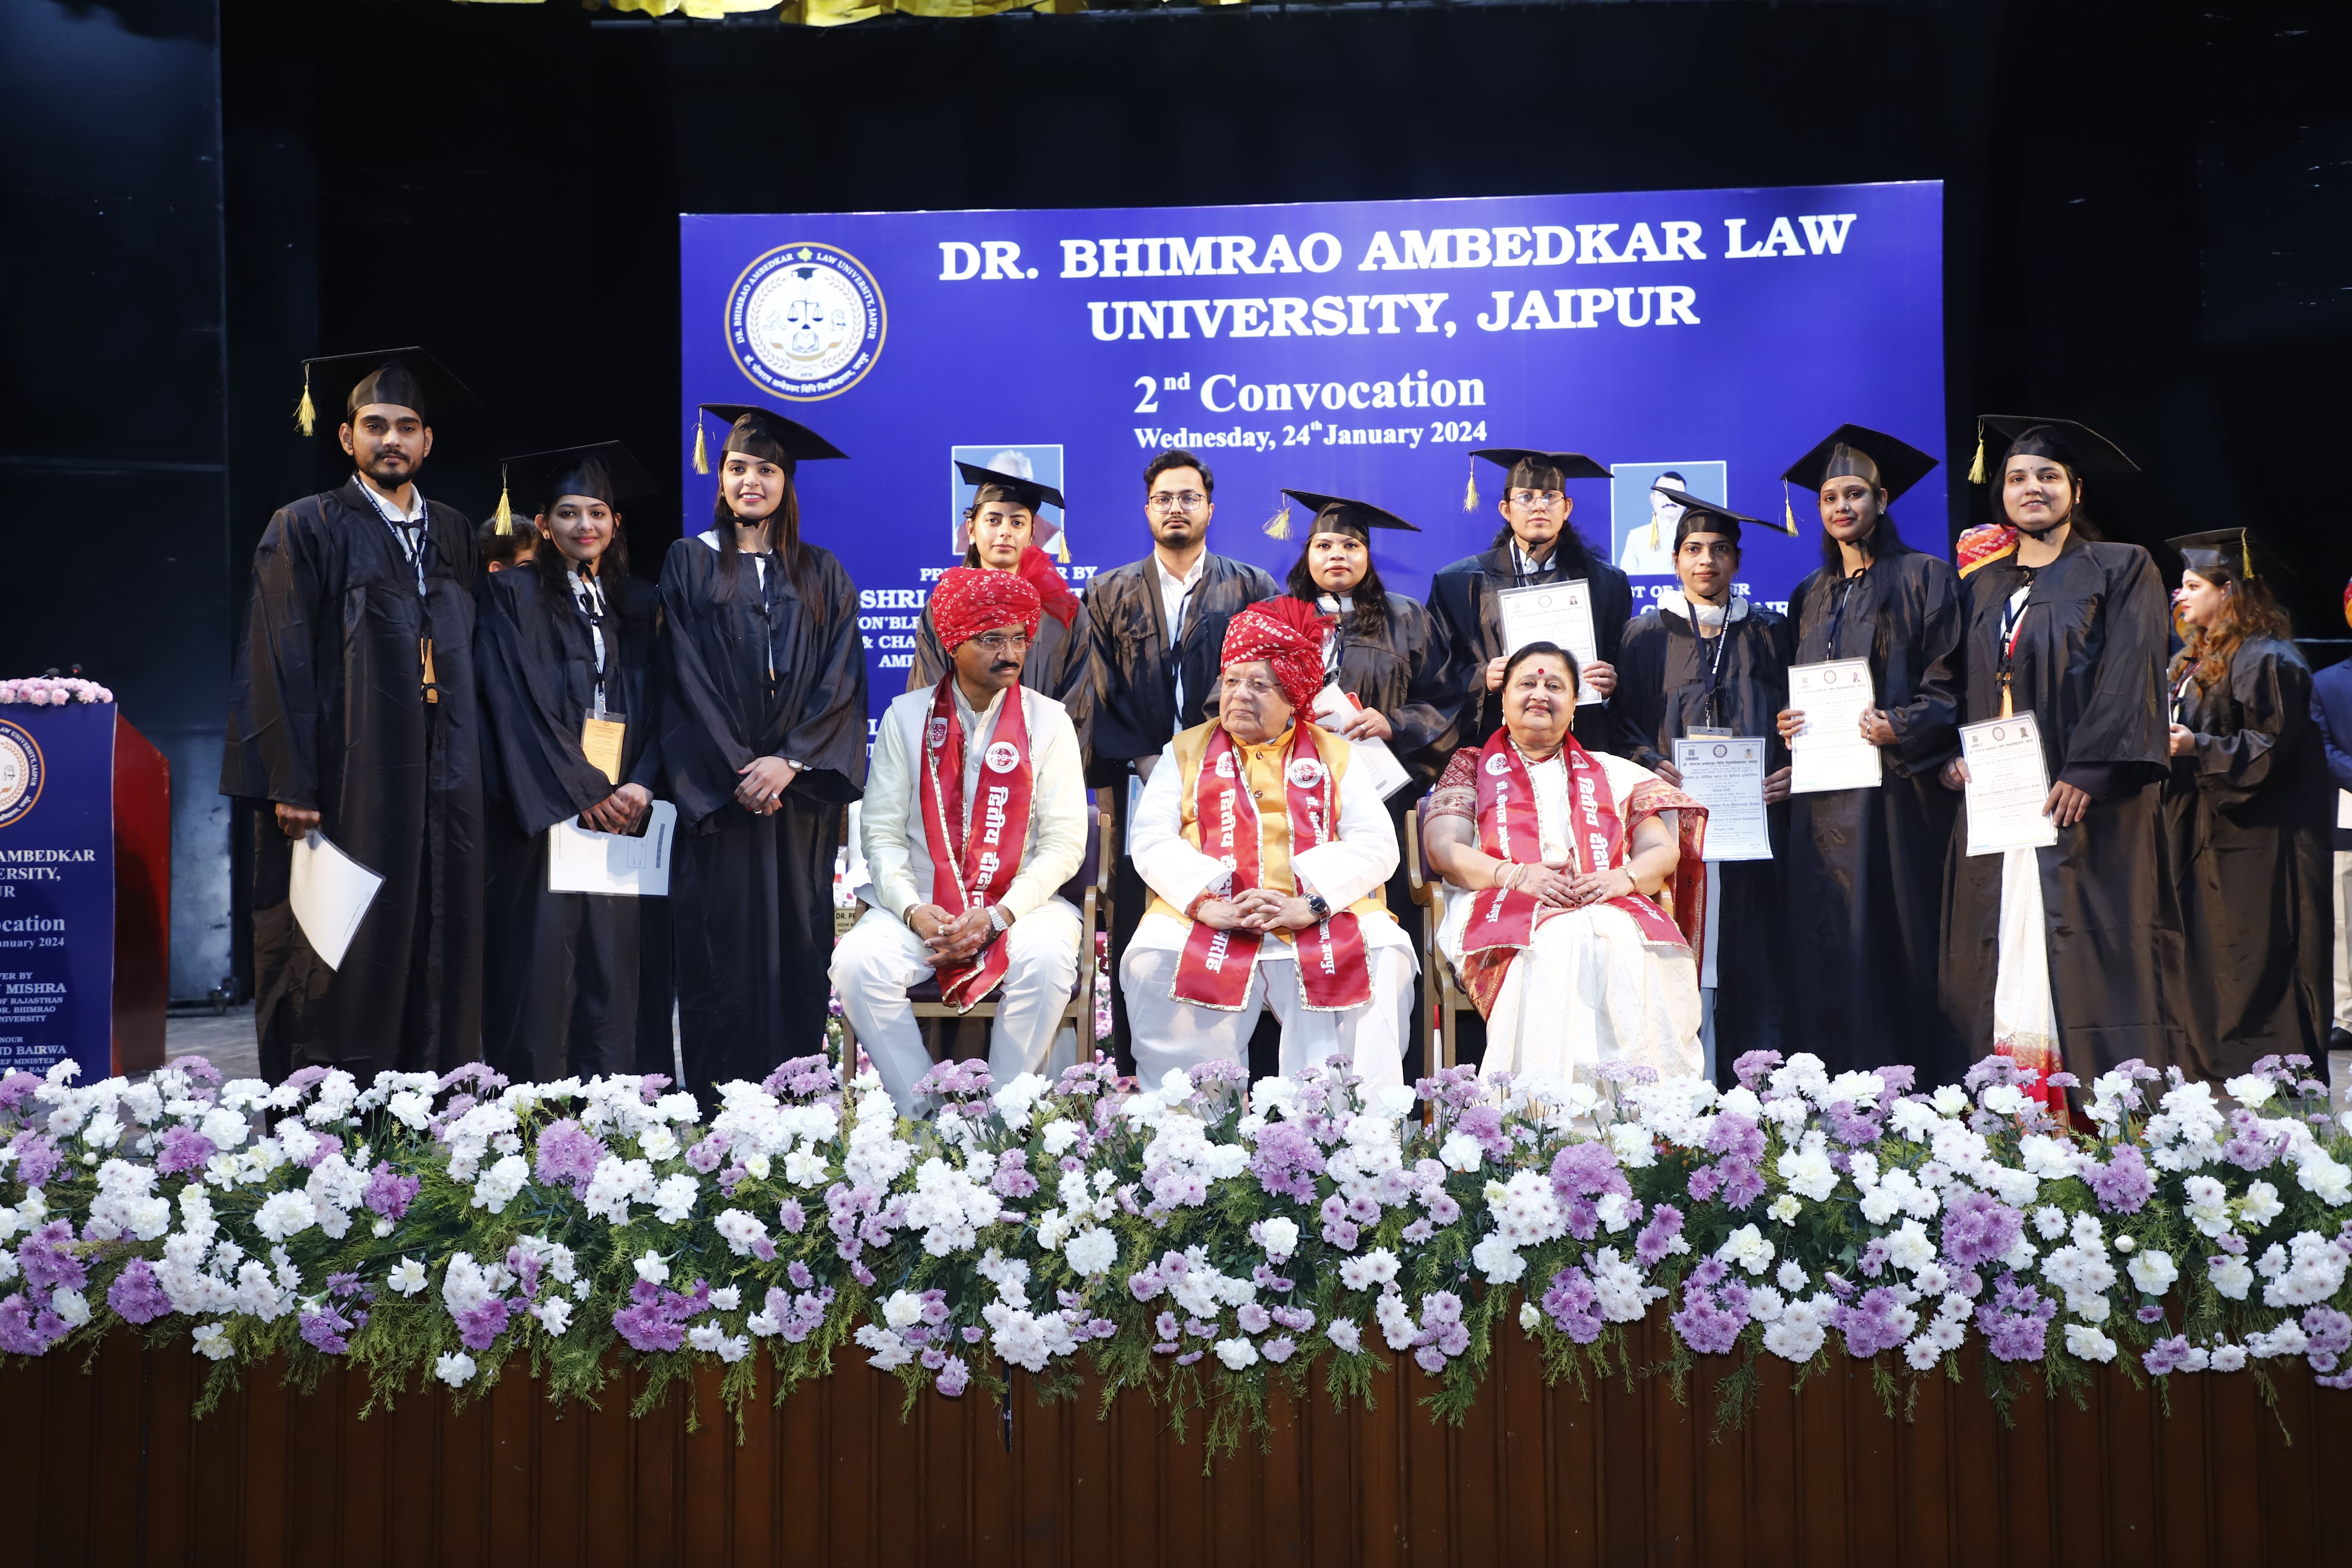 Dr. Bhimrao Ambedkar Law University